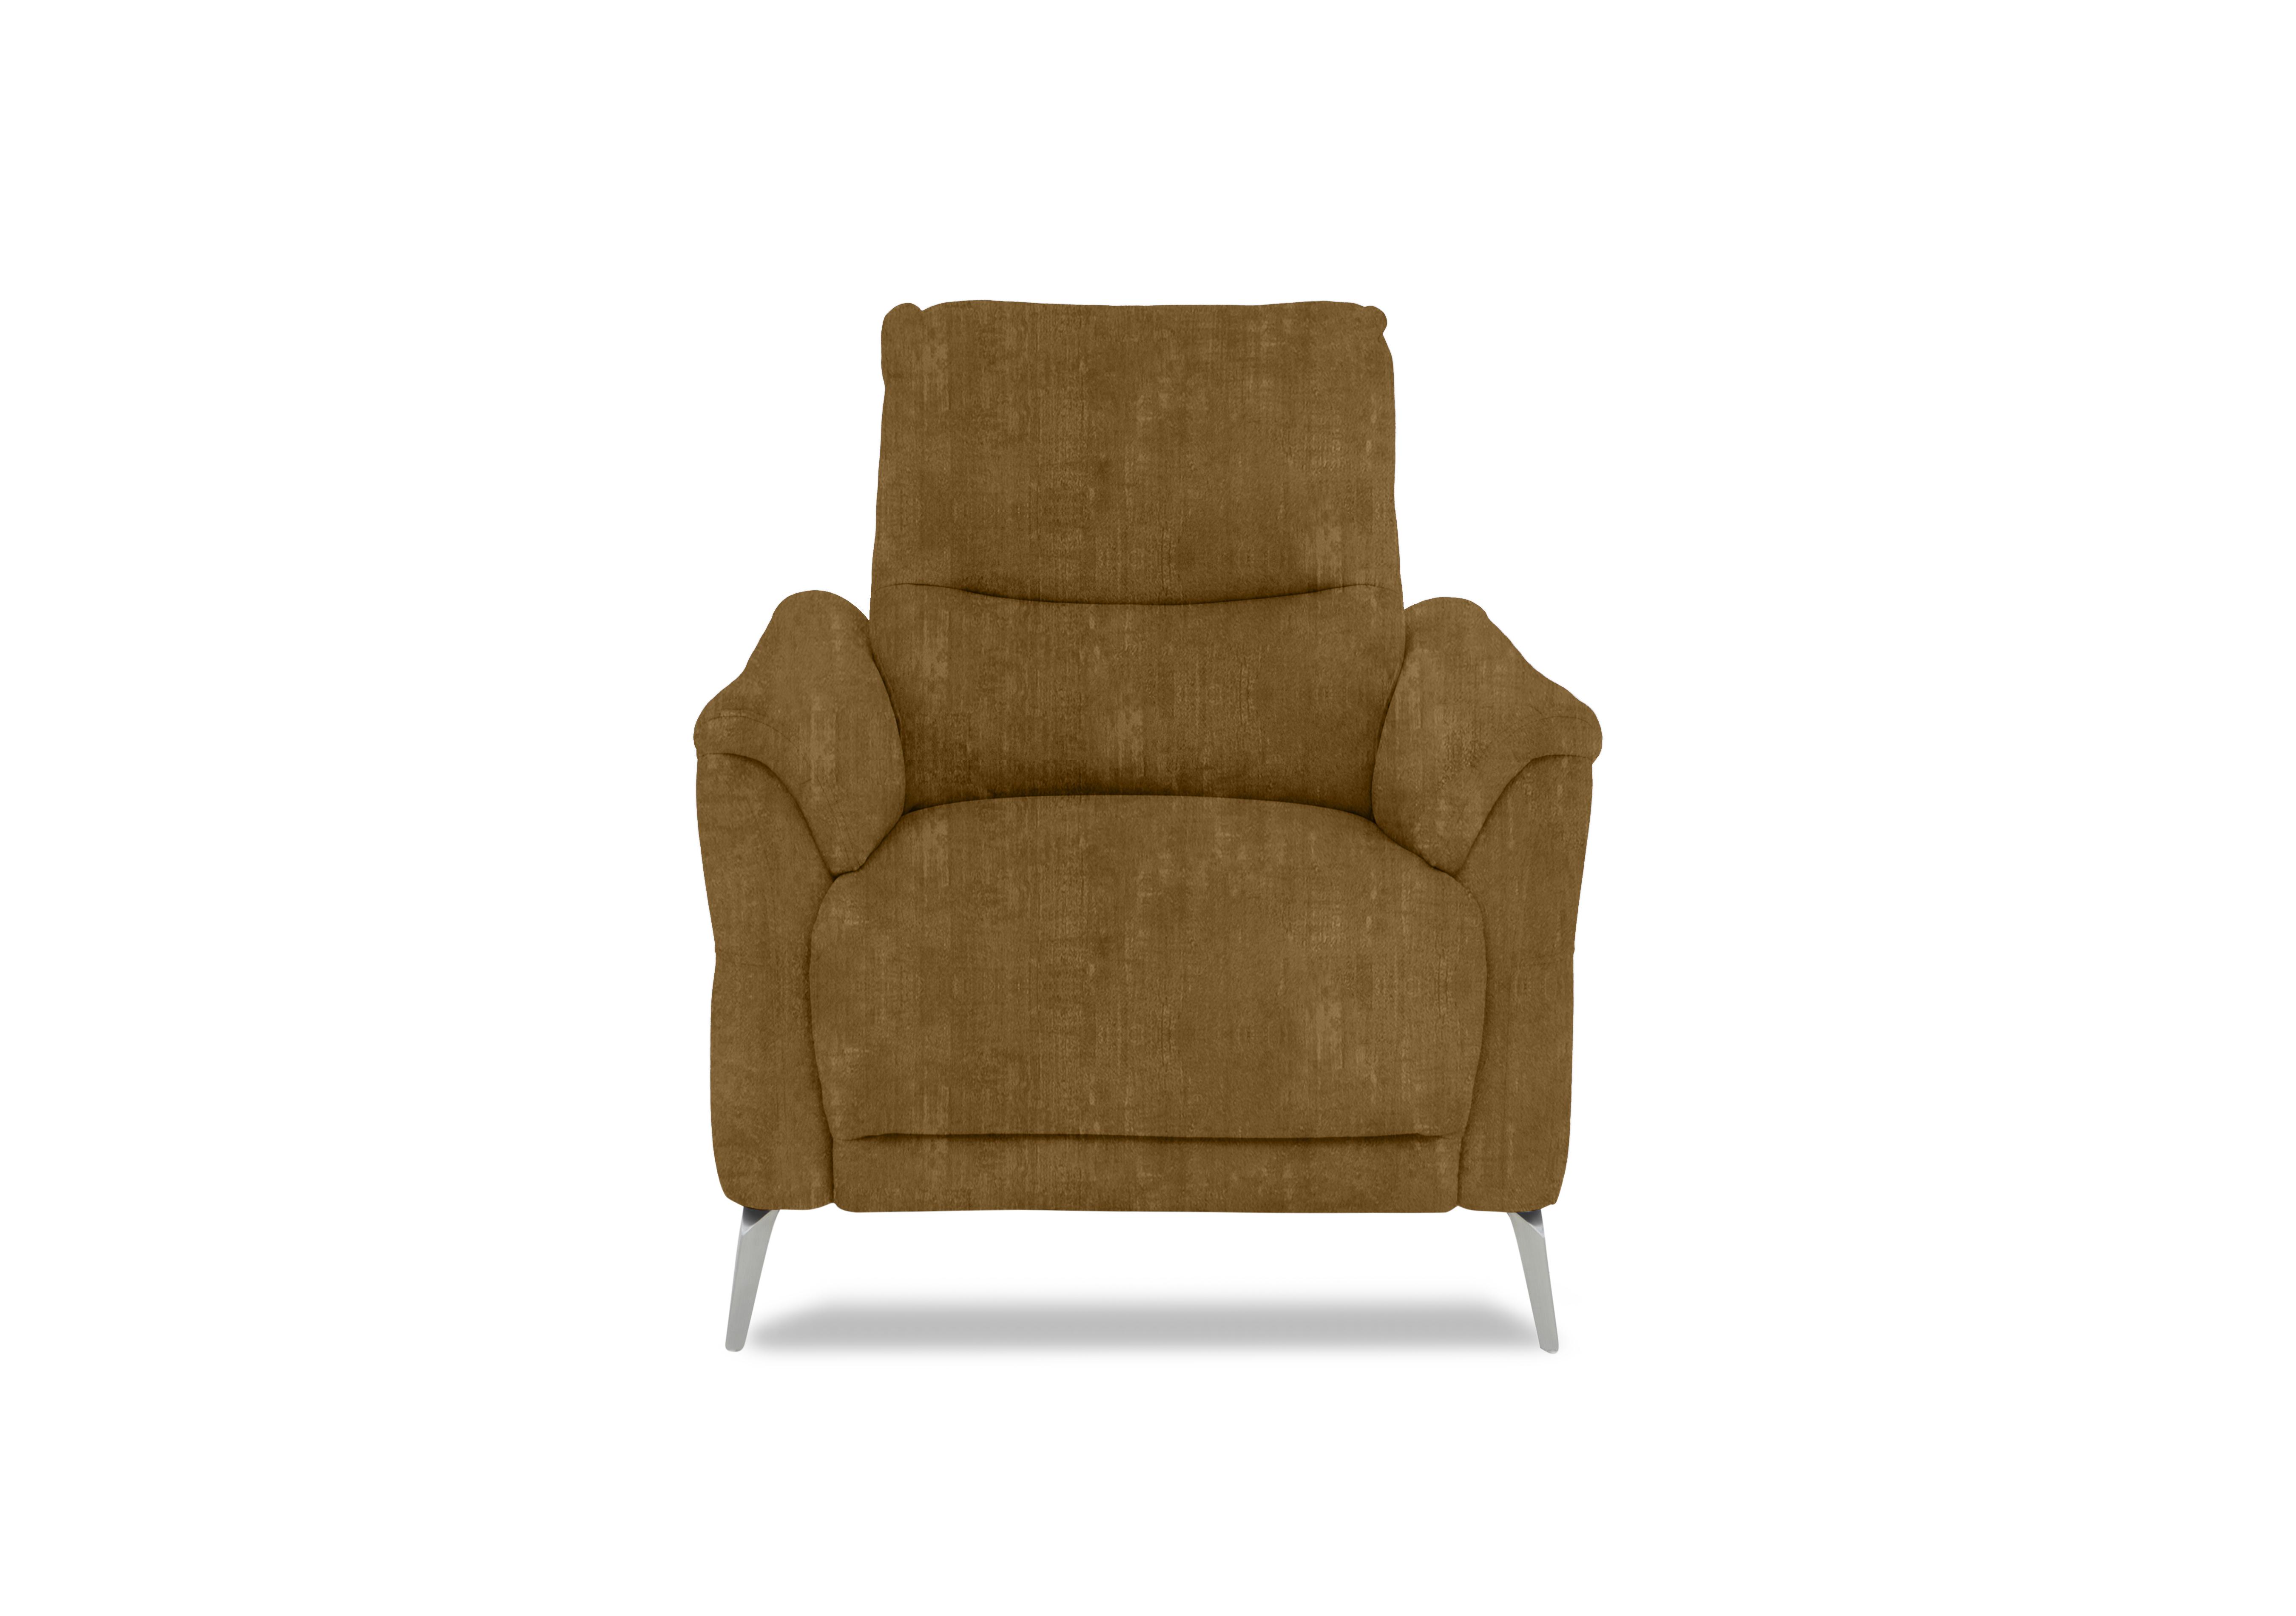 Daytona Fabric Chair in 52002 Heritage Saffron on Furniture Village